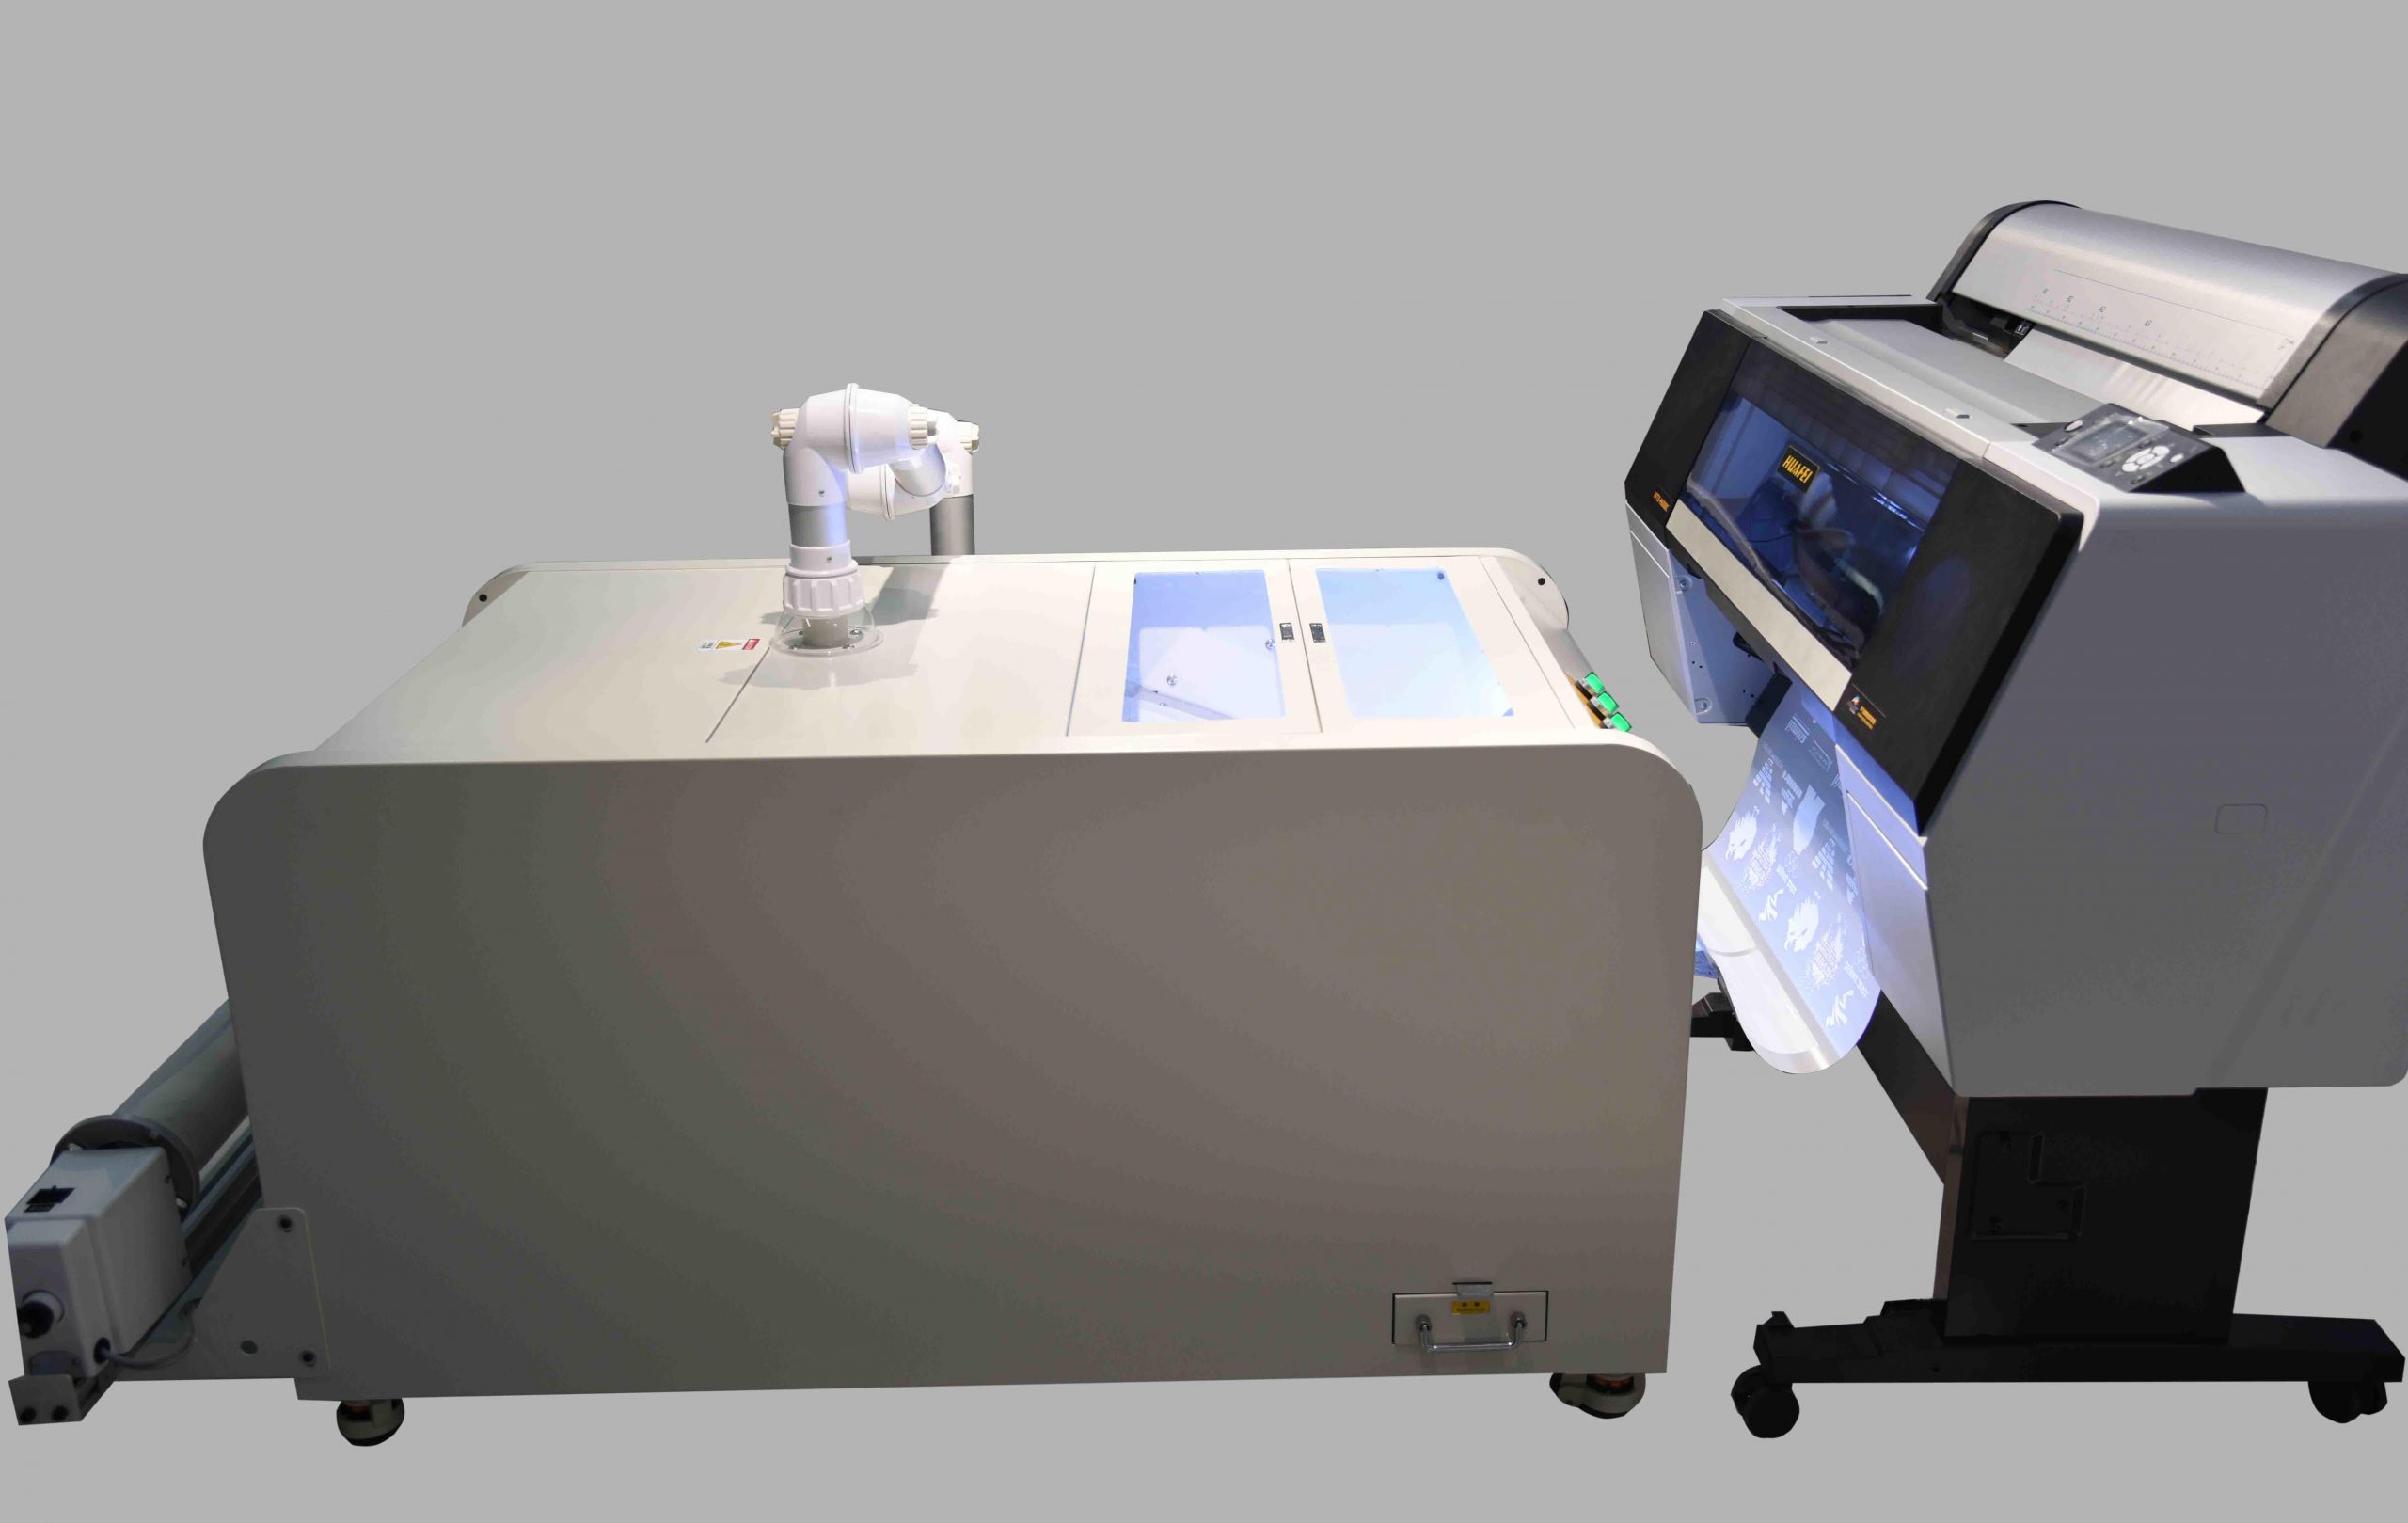 HFTX-F4000 A2 digital t-shirt printer machine Supplier by Jinan Huafei DTG  Technology Co., Ltd, Made in China